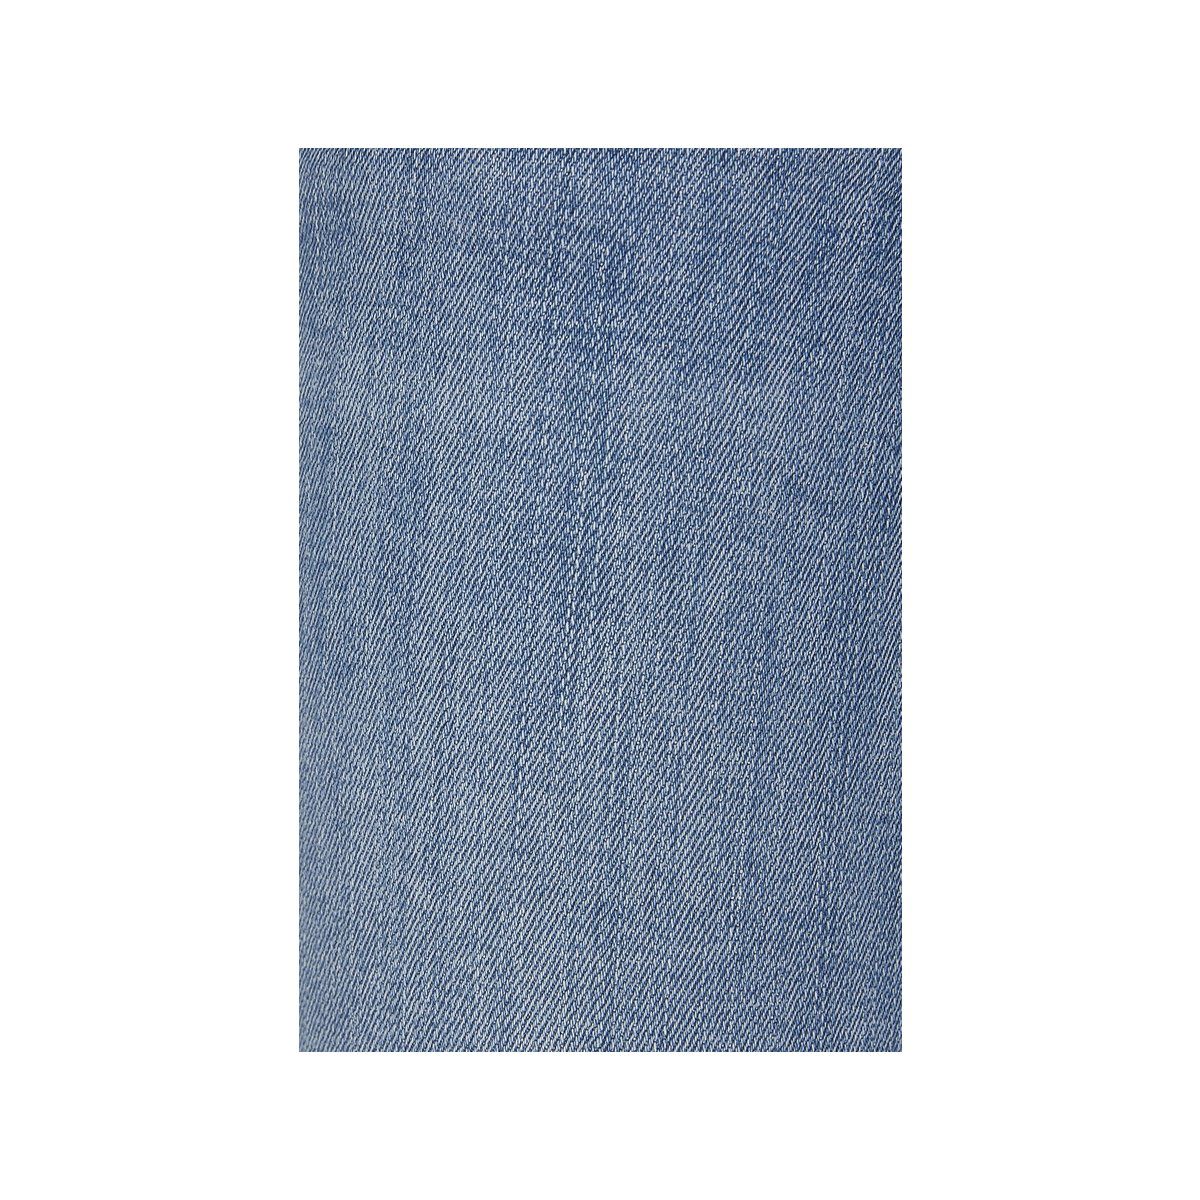 ANGELS 5-Pocket-Jeans blau (1-tlg)